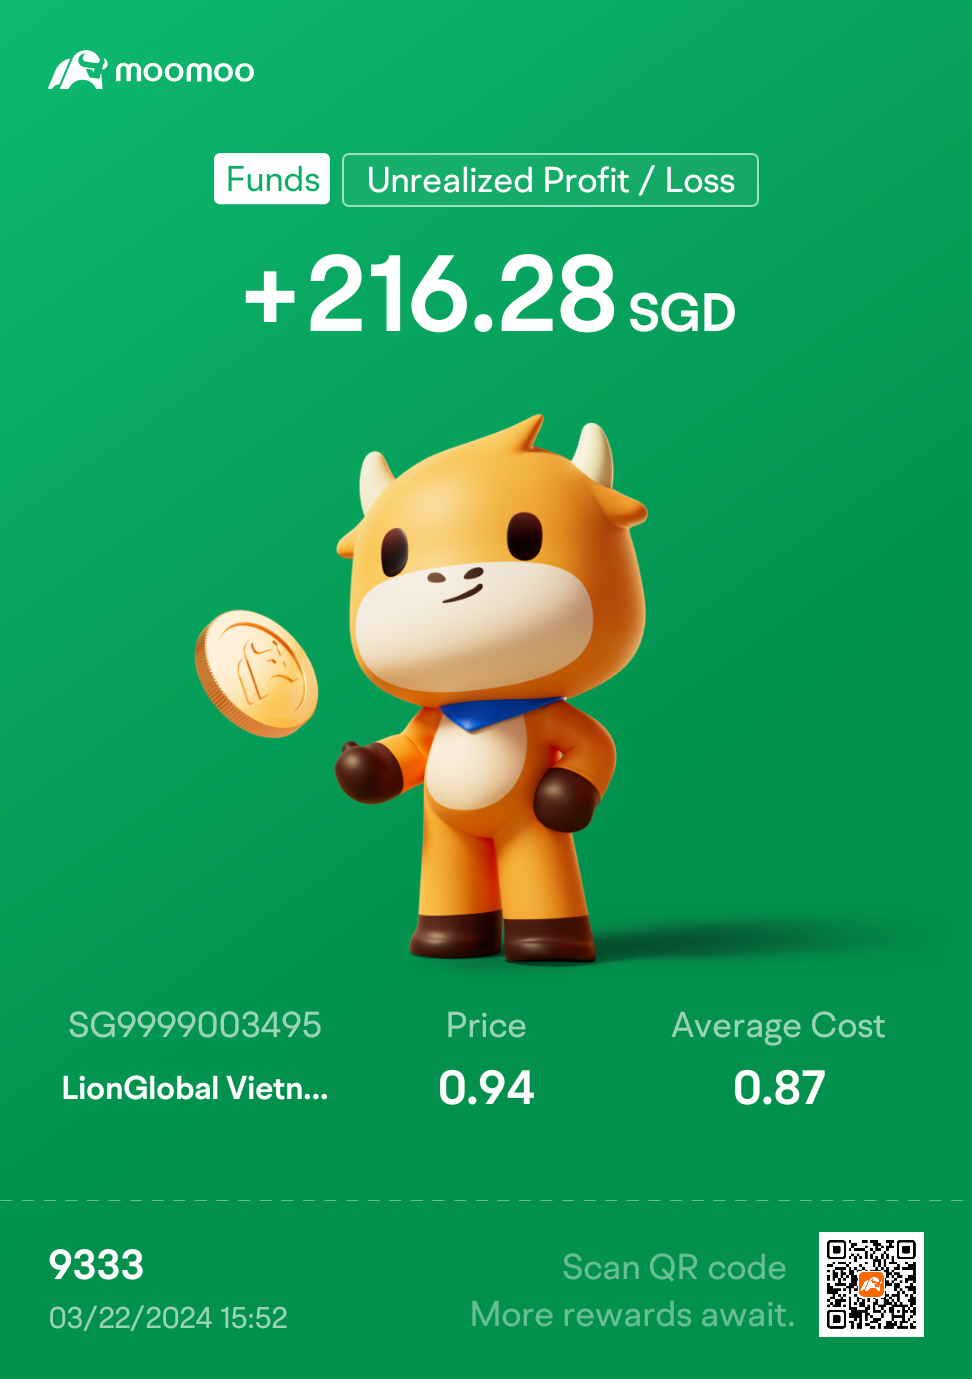 $LionGlobal Vietnam Fund (SG9999003495.MF)$